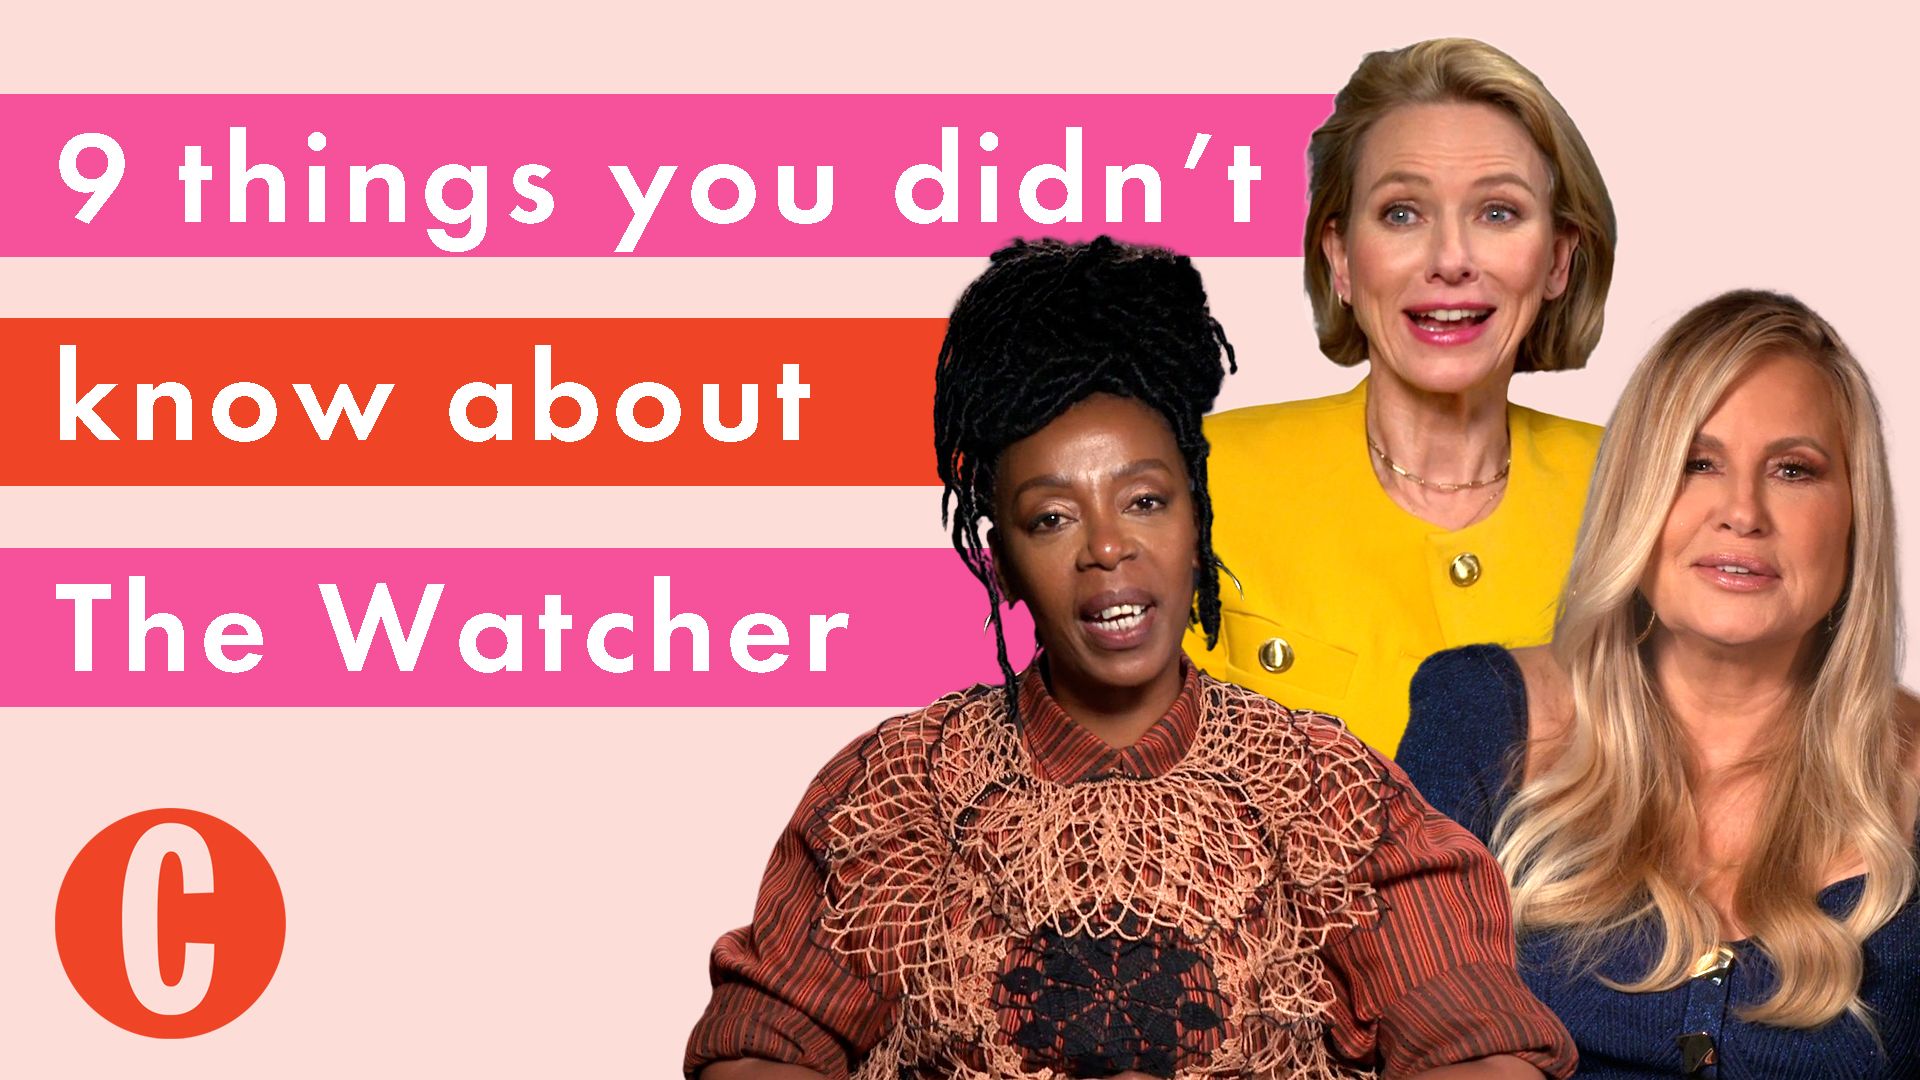 The True Story Behind Netflix's 'The Watcher